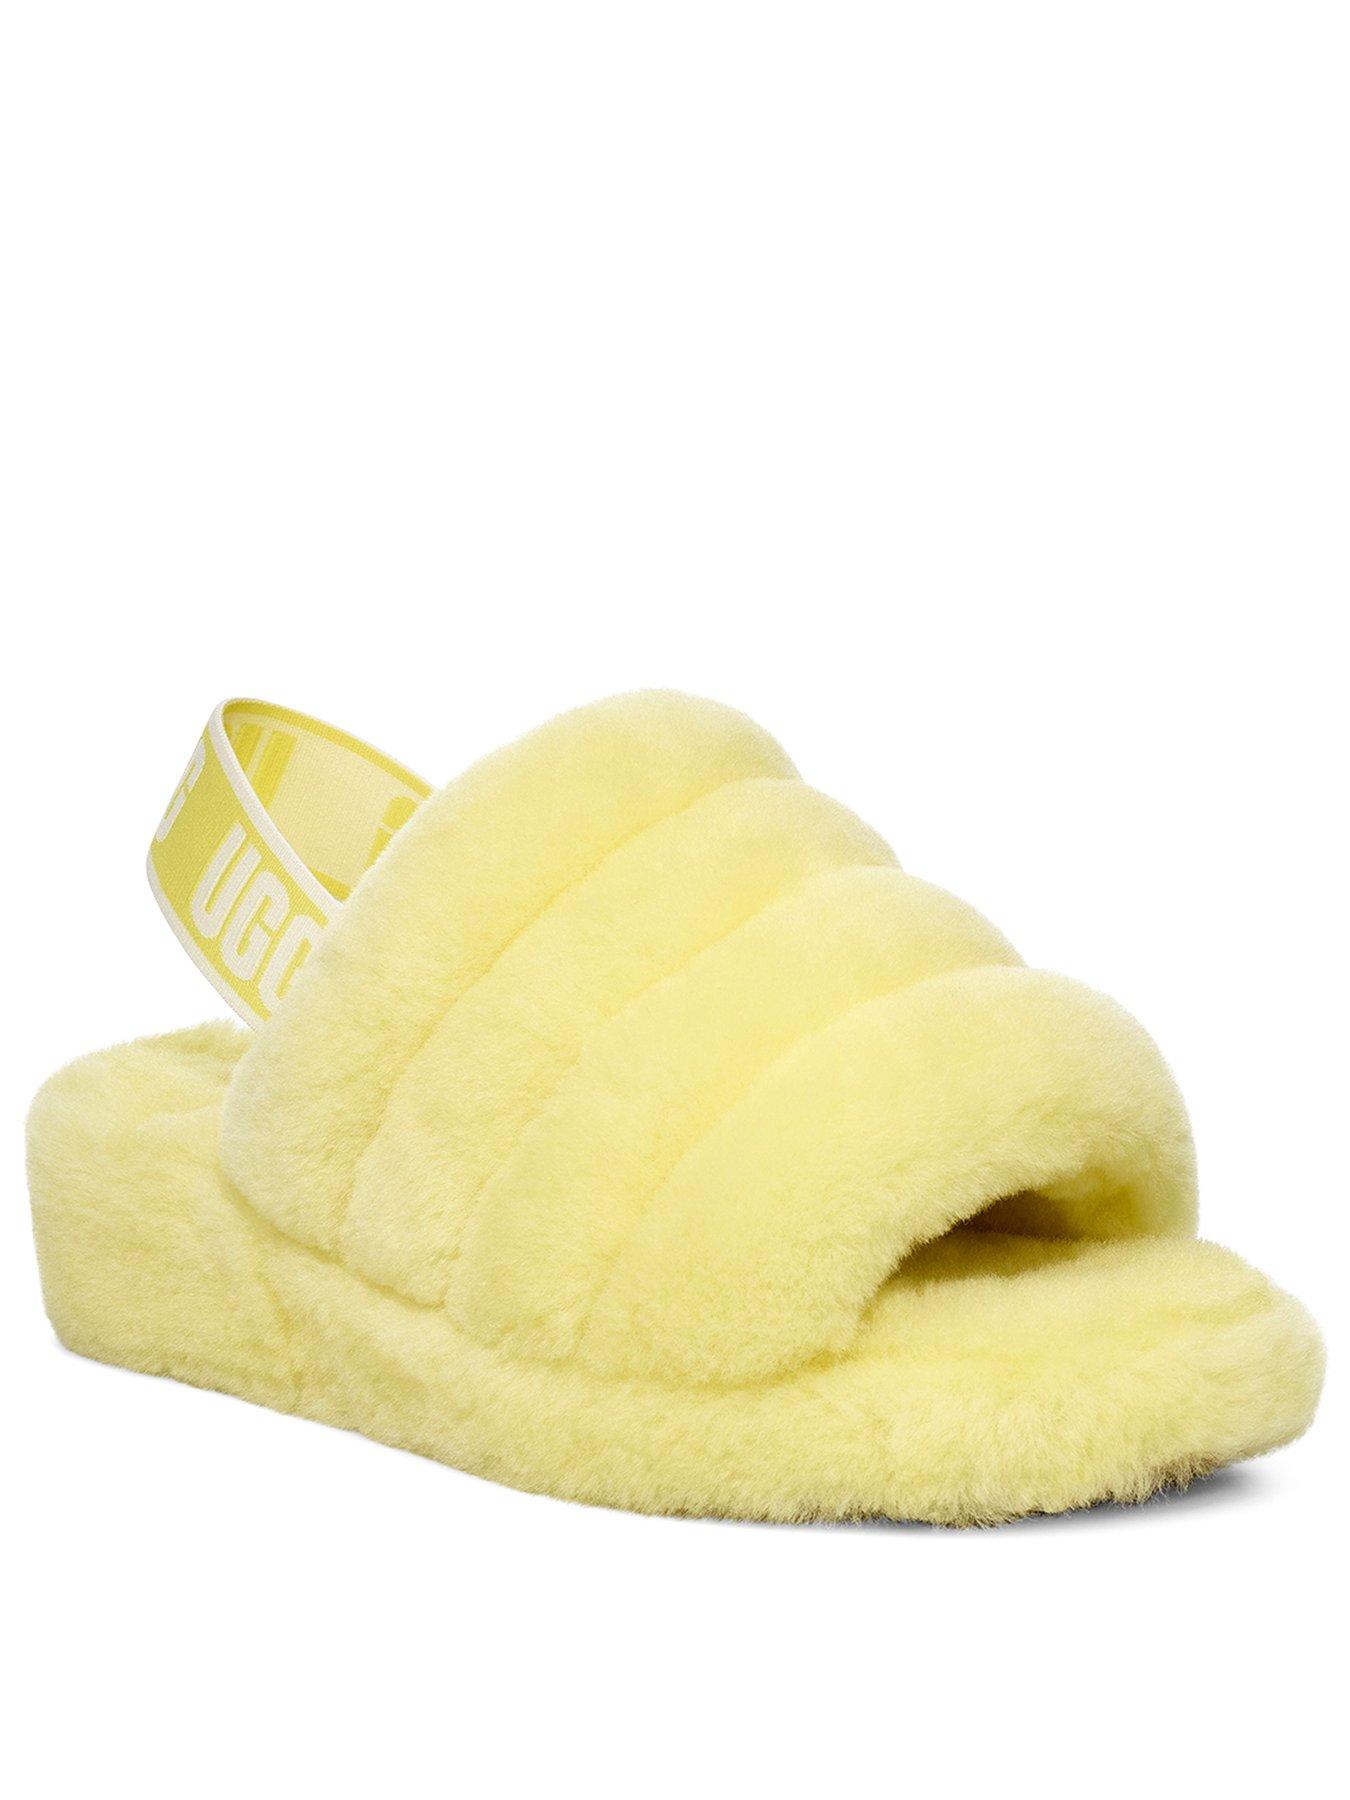 ugg yellow slippers